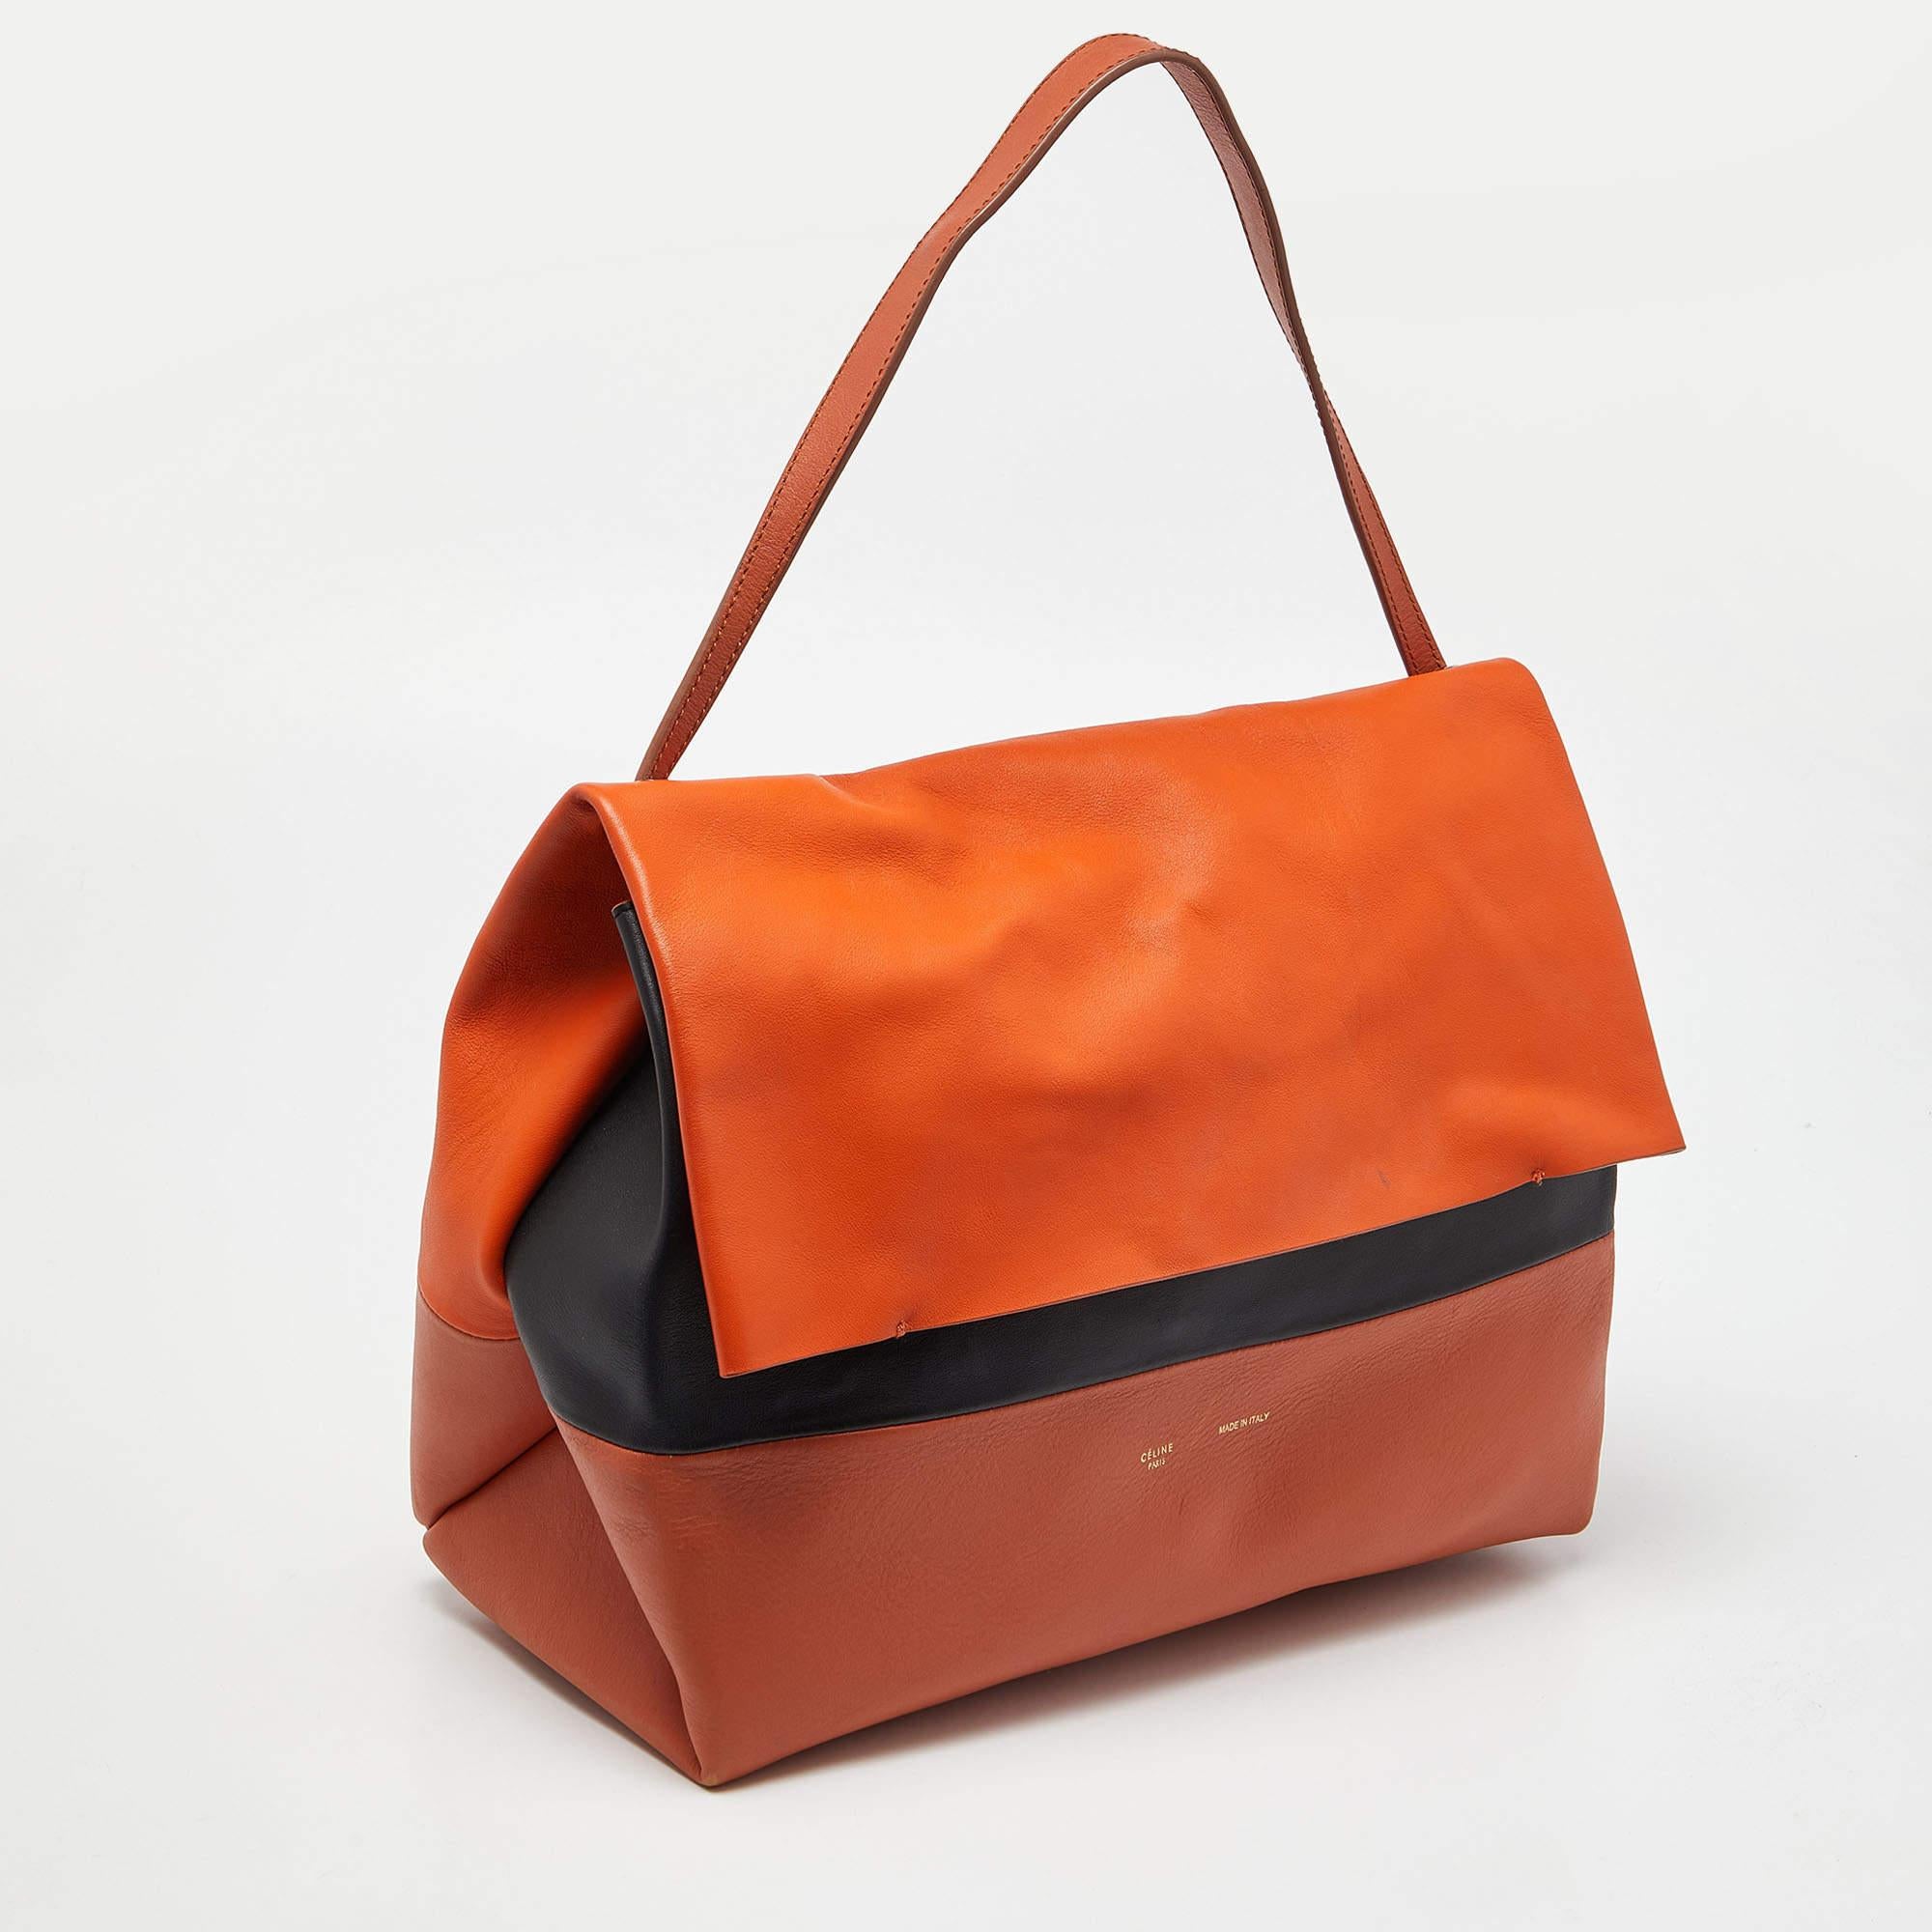 Celine Tri Color Leather All Soft Shoulder Bag In Good Condition For Sale In Dubai, Al Qouz 2